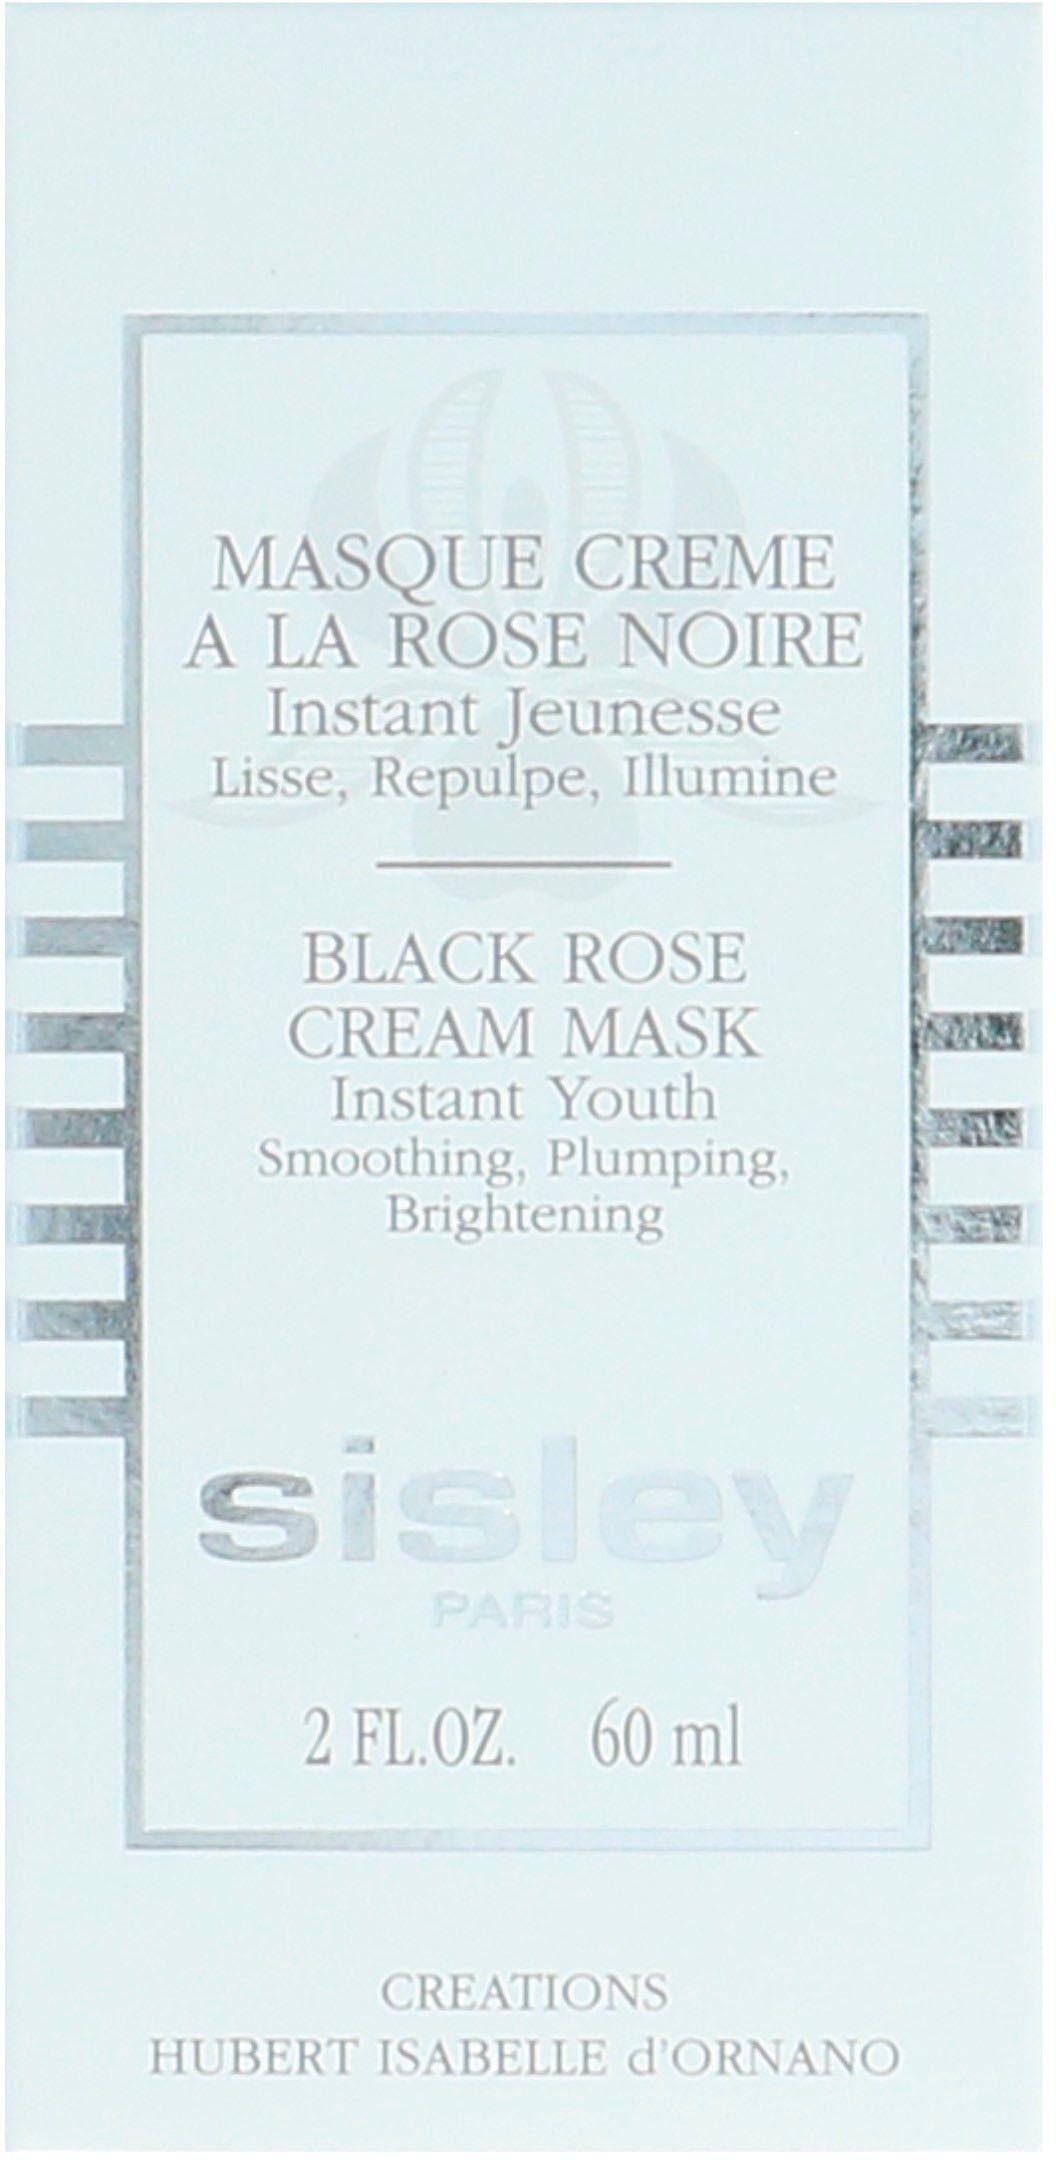 Mask sisley Cream Black Gesichtsmaske Rose